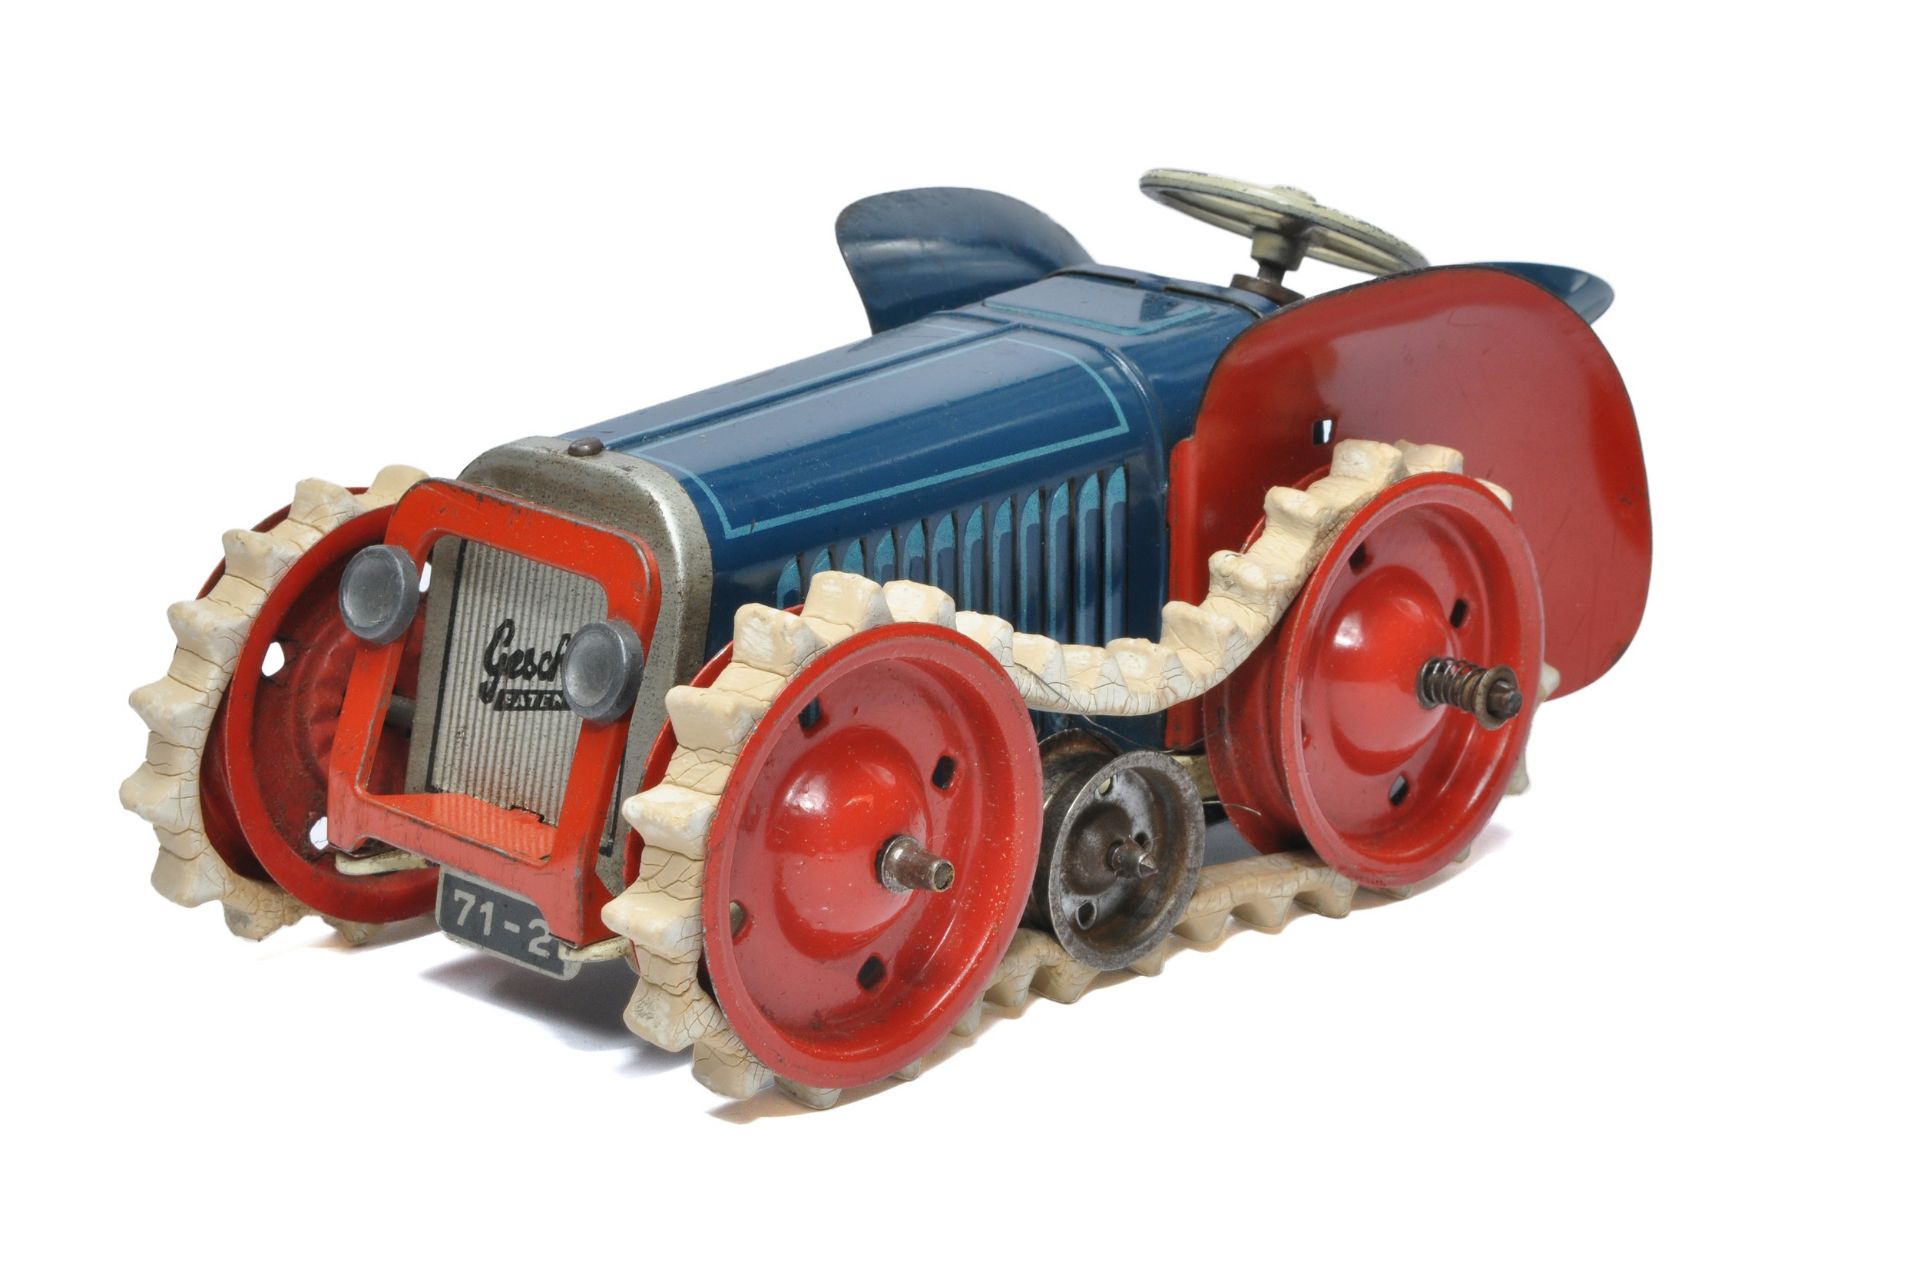 Gescha German tinplate mechanical crawler tractor. Untested but displays generally very good, some